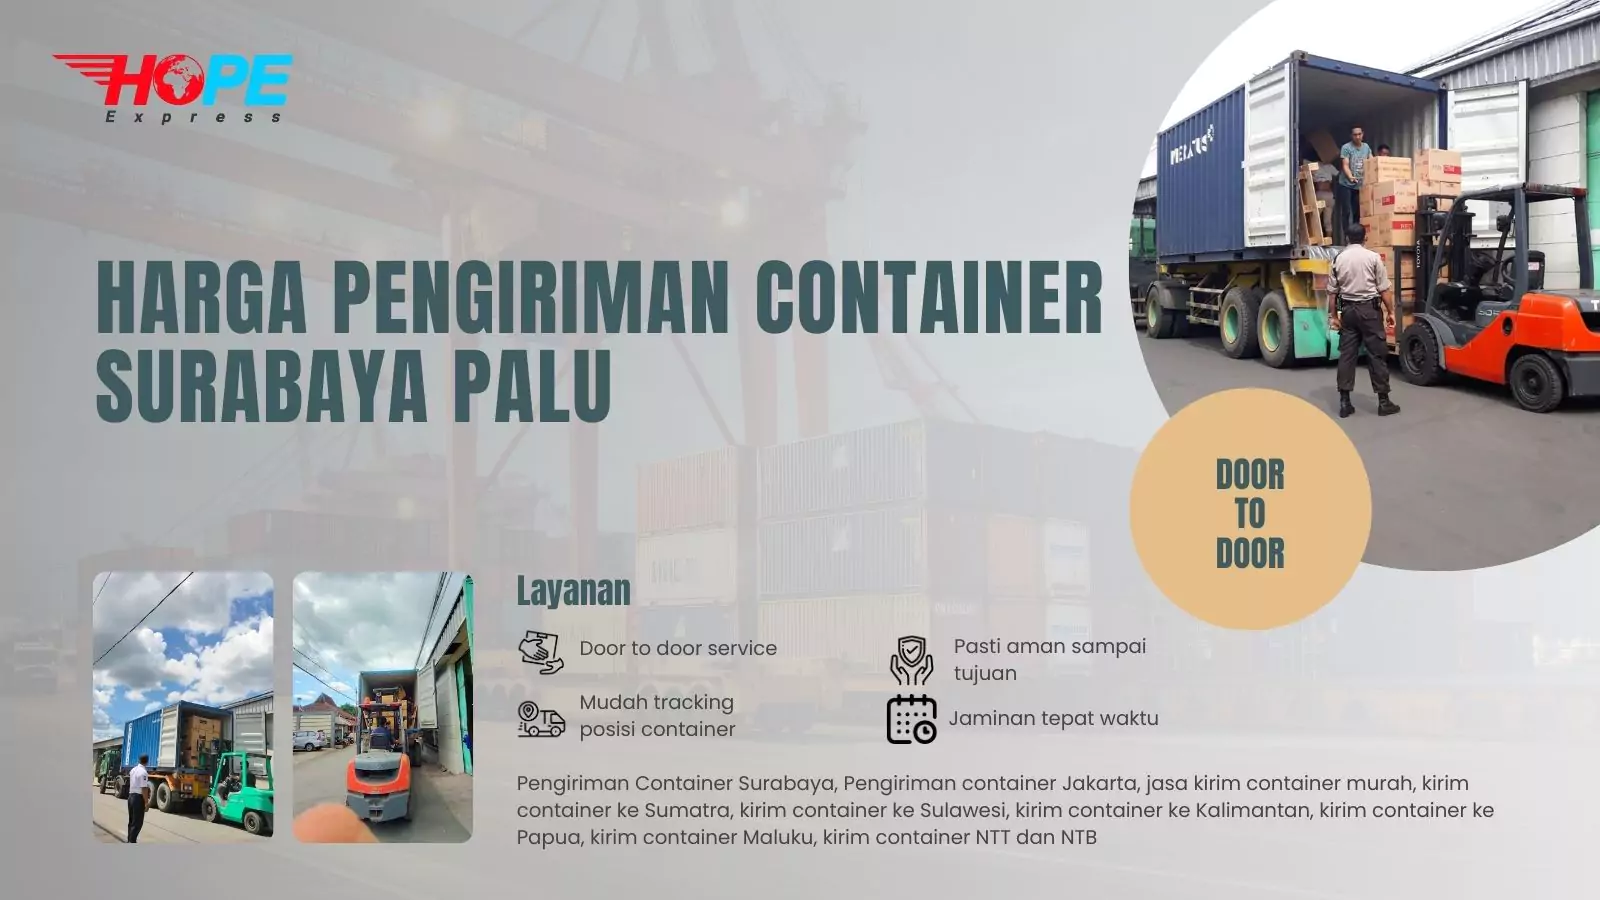 Harga Pengiriman Container Surabaya Palu